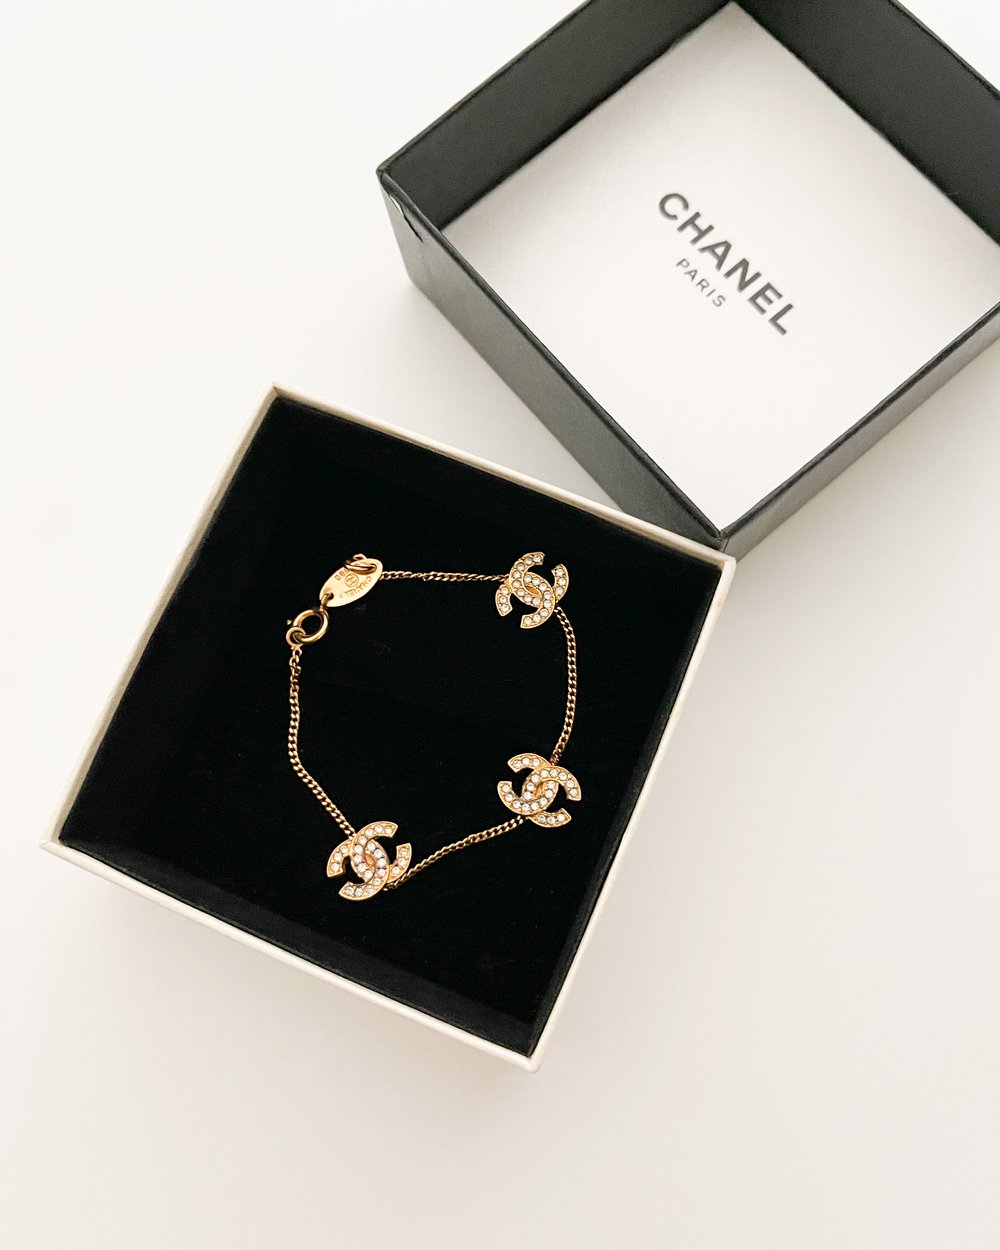 CHANEL, Jewelry, Chanel Bangle Bracelets Set Of 3